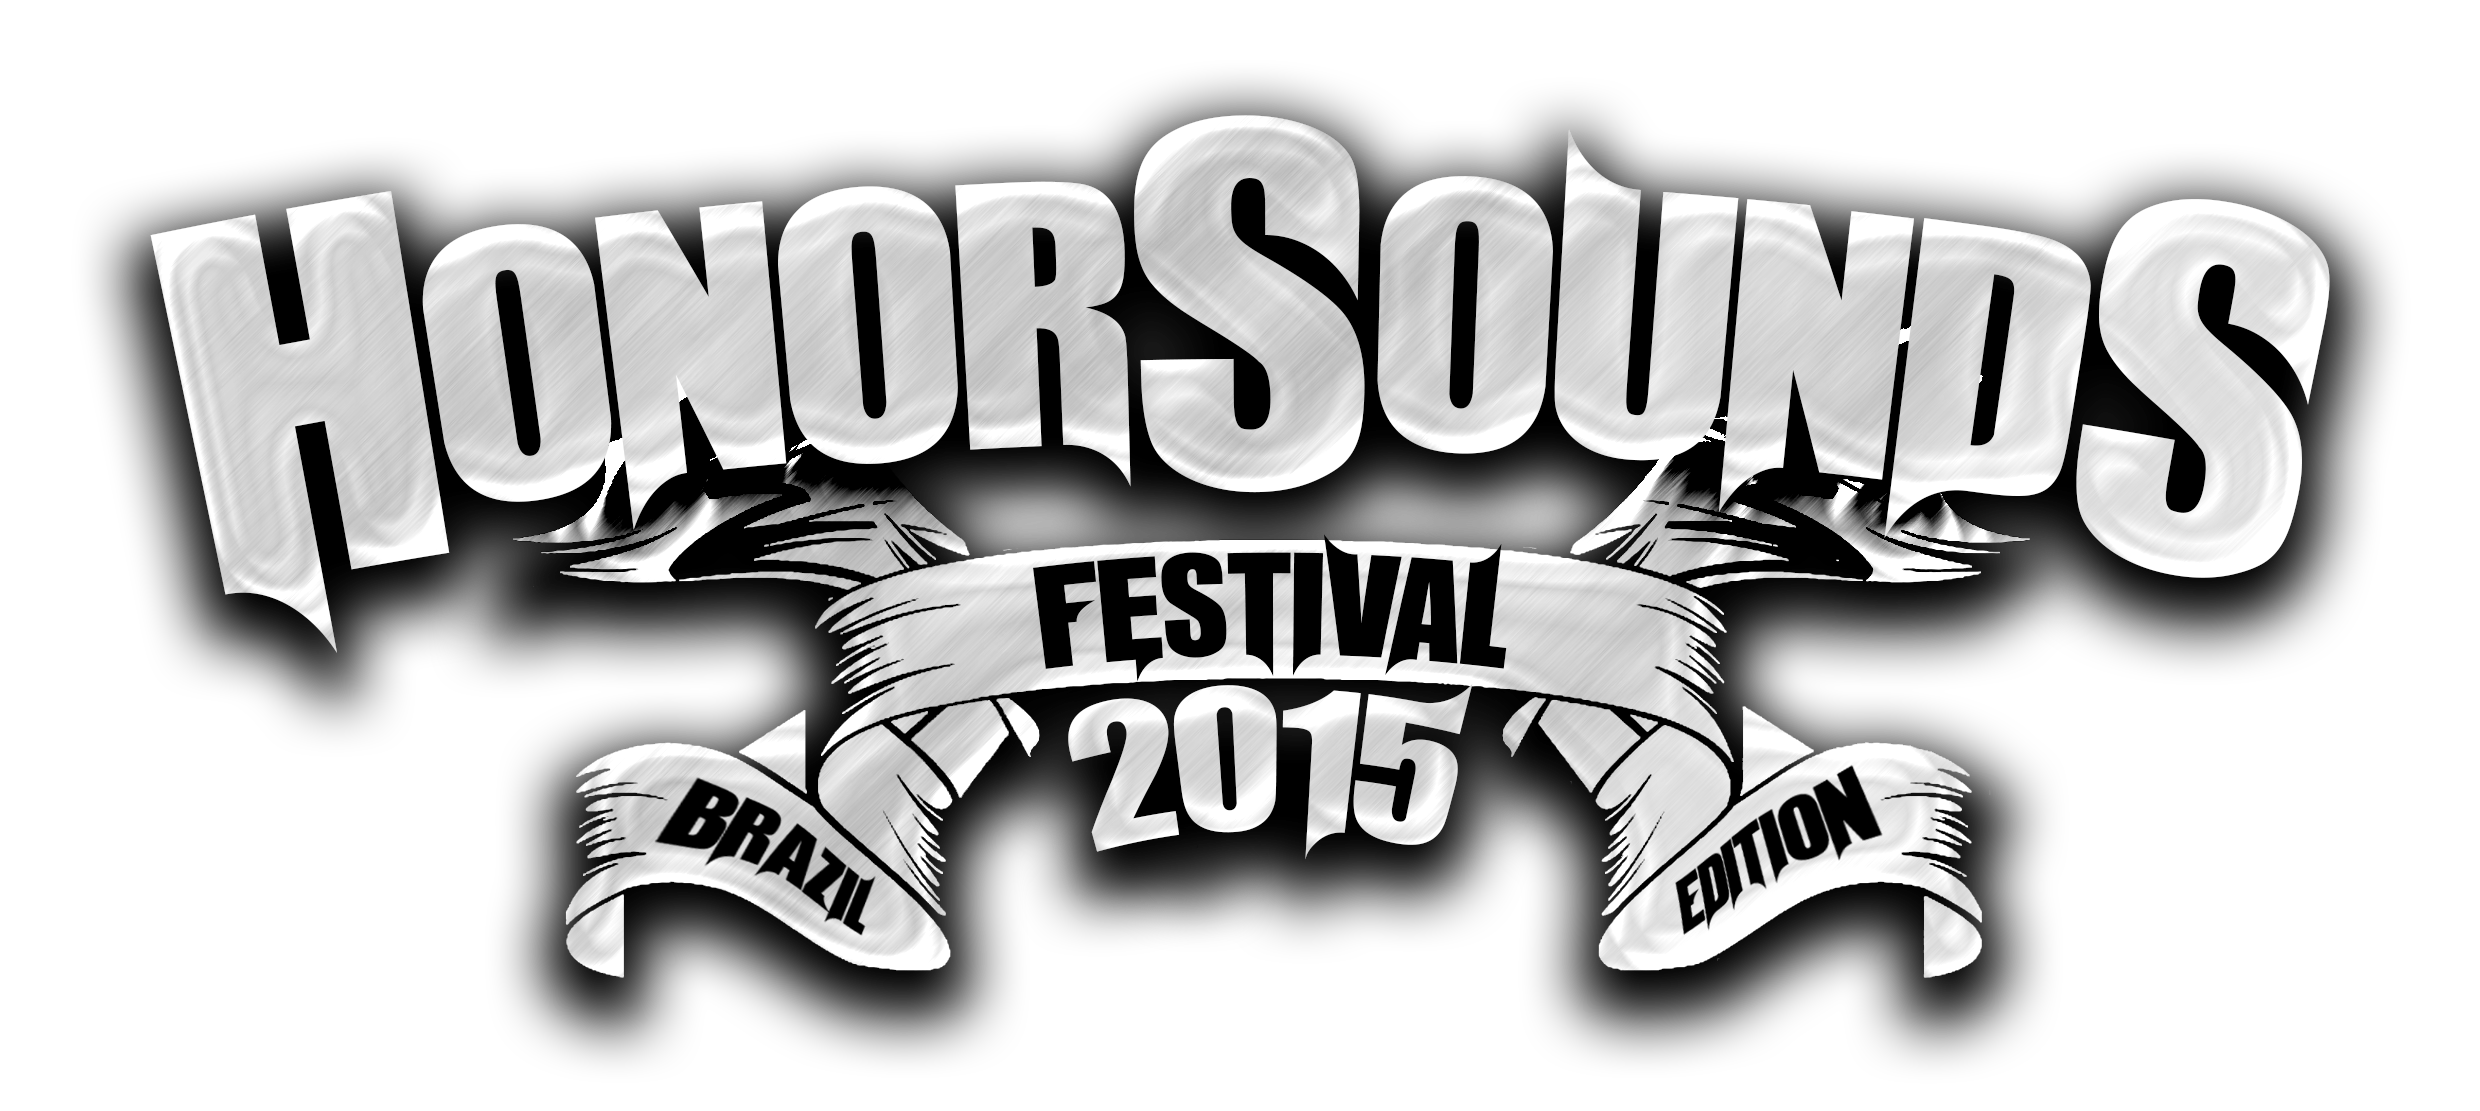 HonorSounds Festival logo